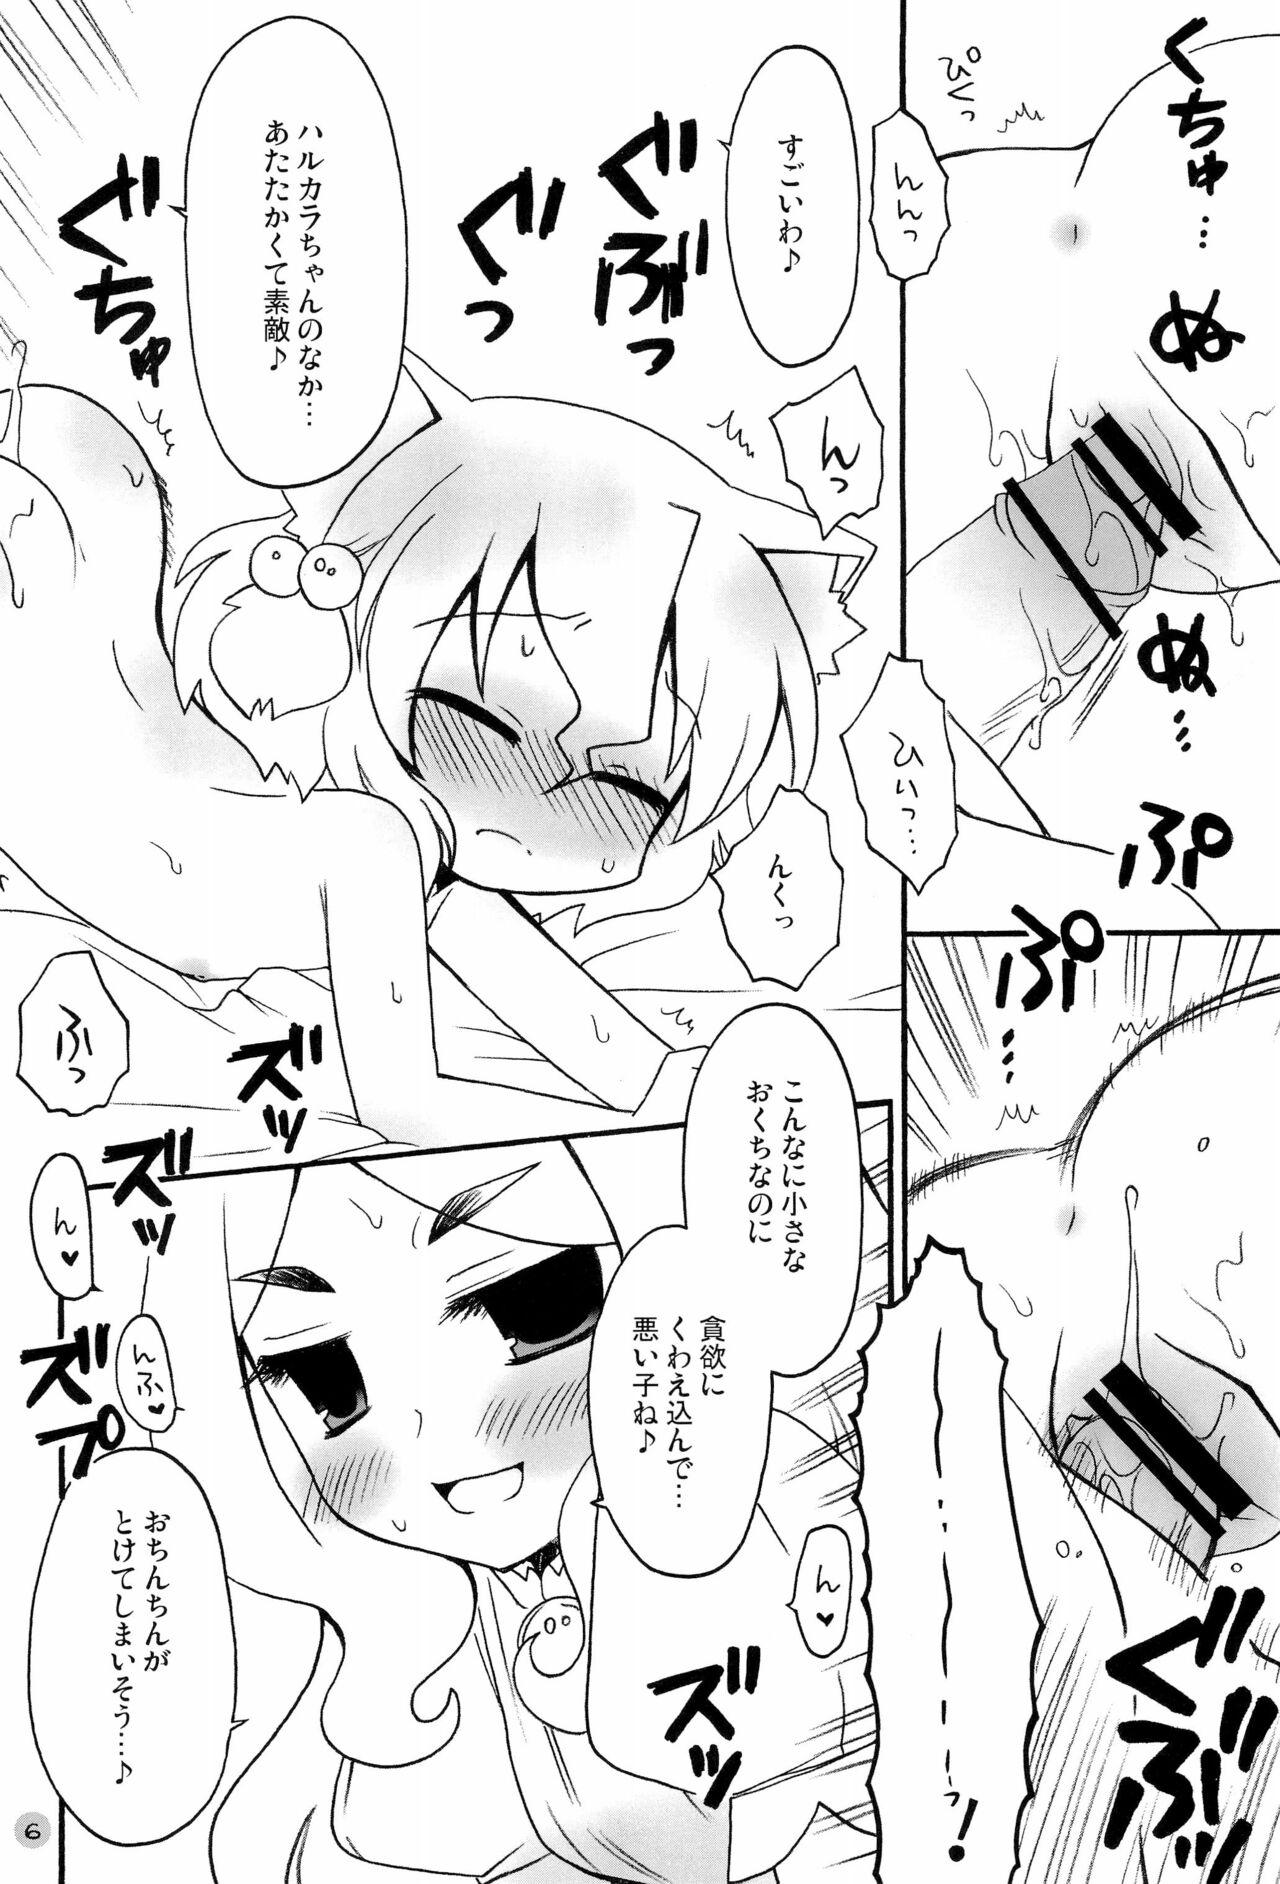 Sofa Harumomo no Tsubomi - 7th dragon Nudist - Page 6